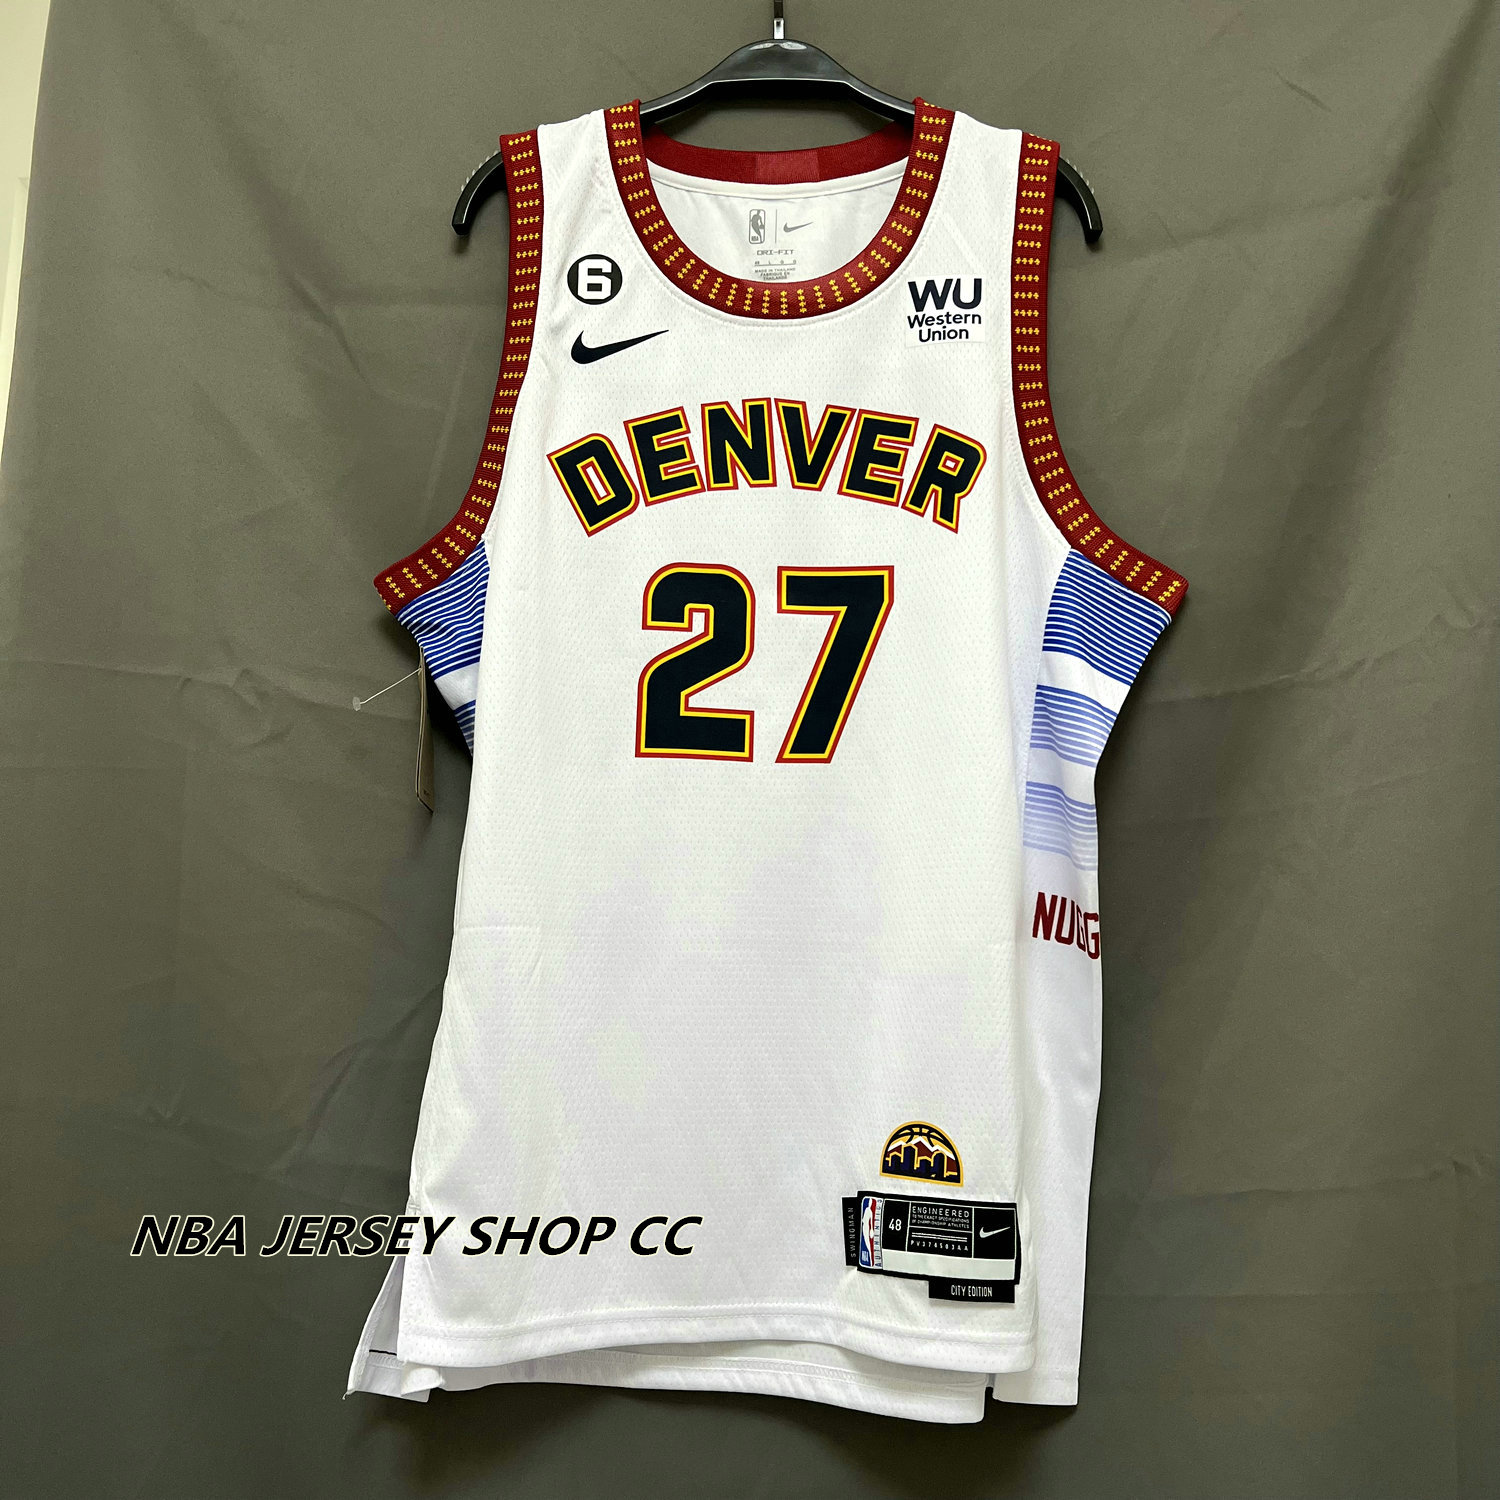 Nike Men's Denver Nuggets Jamal Murray #27 Navy Dri-Fit Swingman Jersey, Medium, Blue